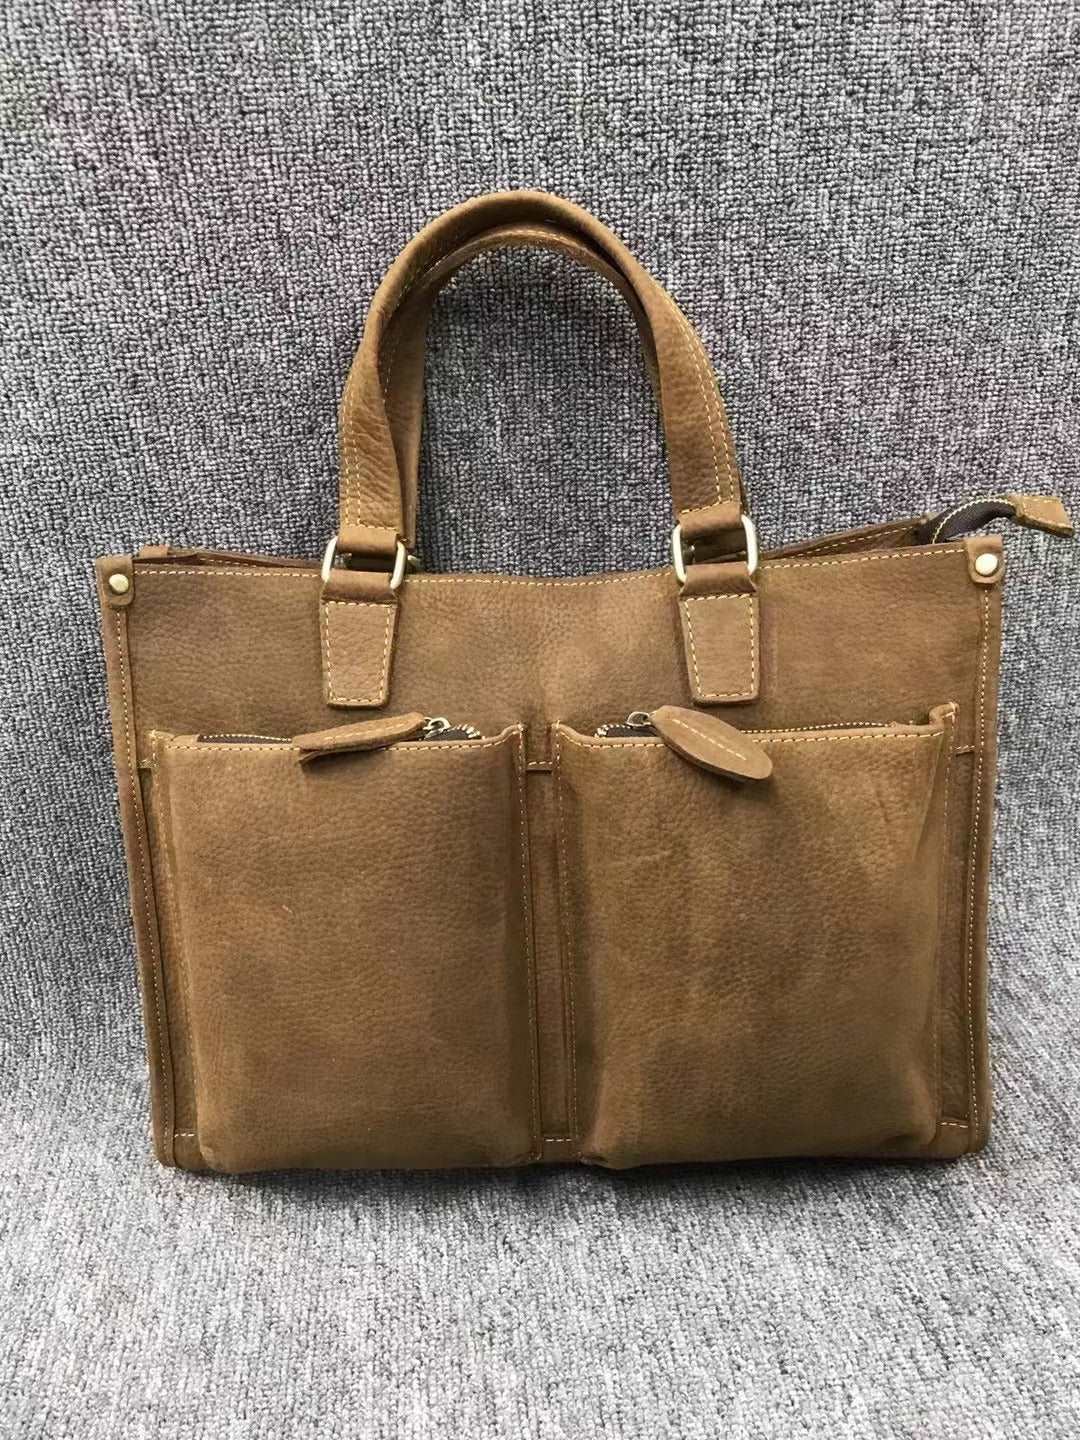 Vintage-Inspired Leather Work Bag woyaza